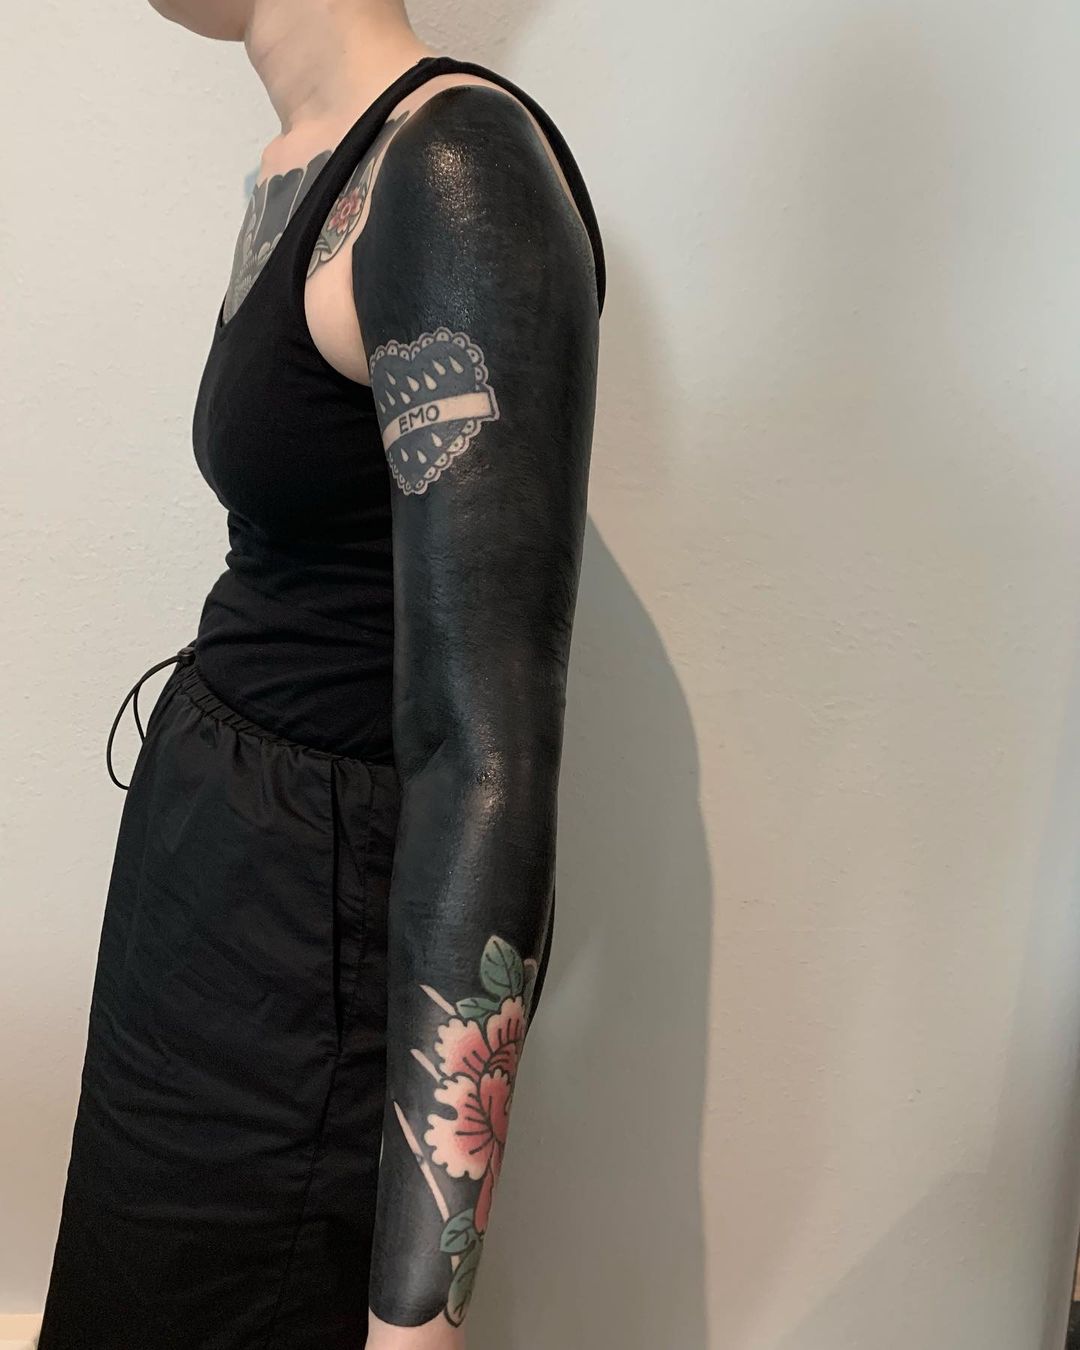 BLACKOUT Tattoo – All Things Tattoo